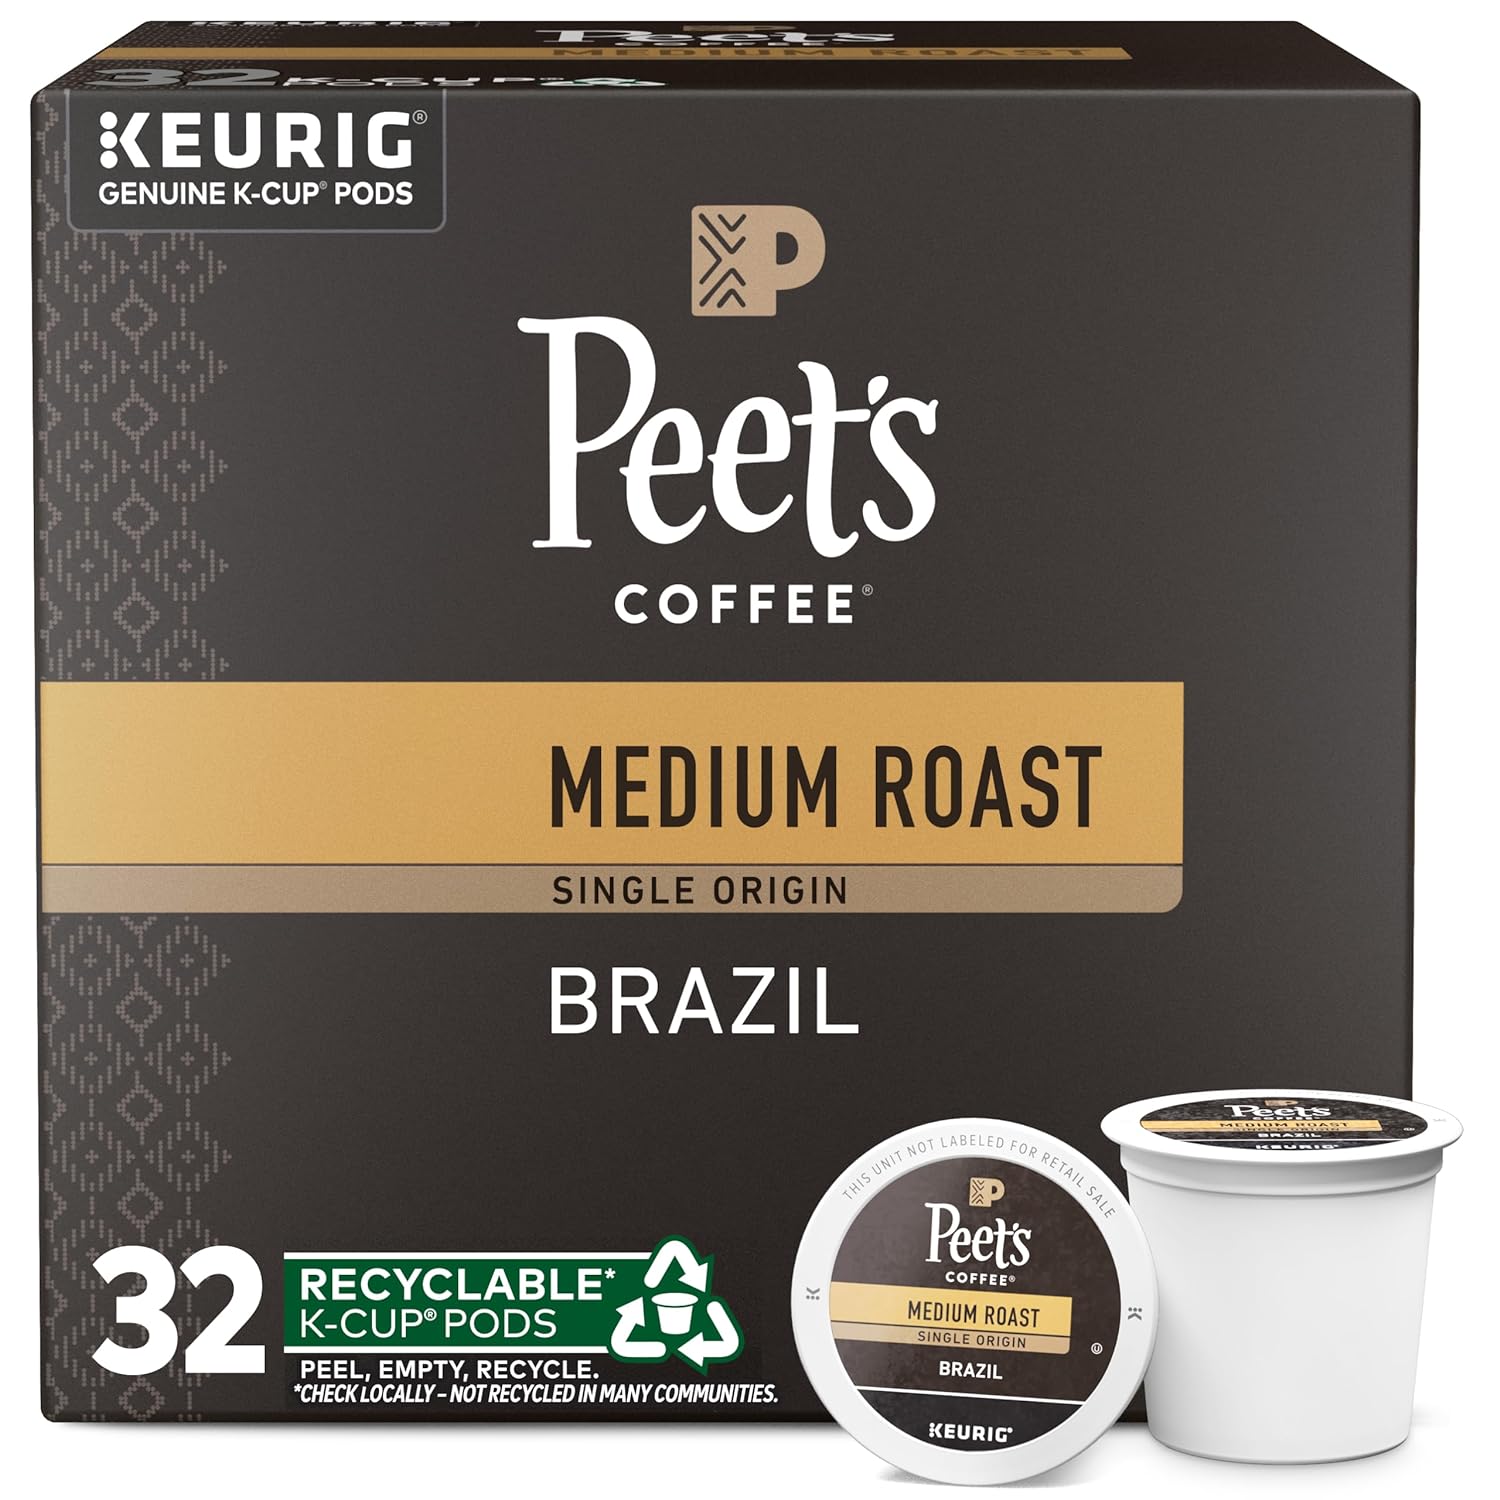 Peet's Coffee, Medium Roast K-Cup Pods for Keurig Brewers - Single Origin Brazil 32 Count (1 Box of 32 K-Cup Pods)